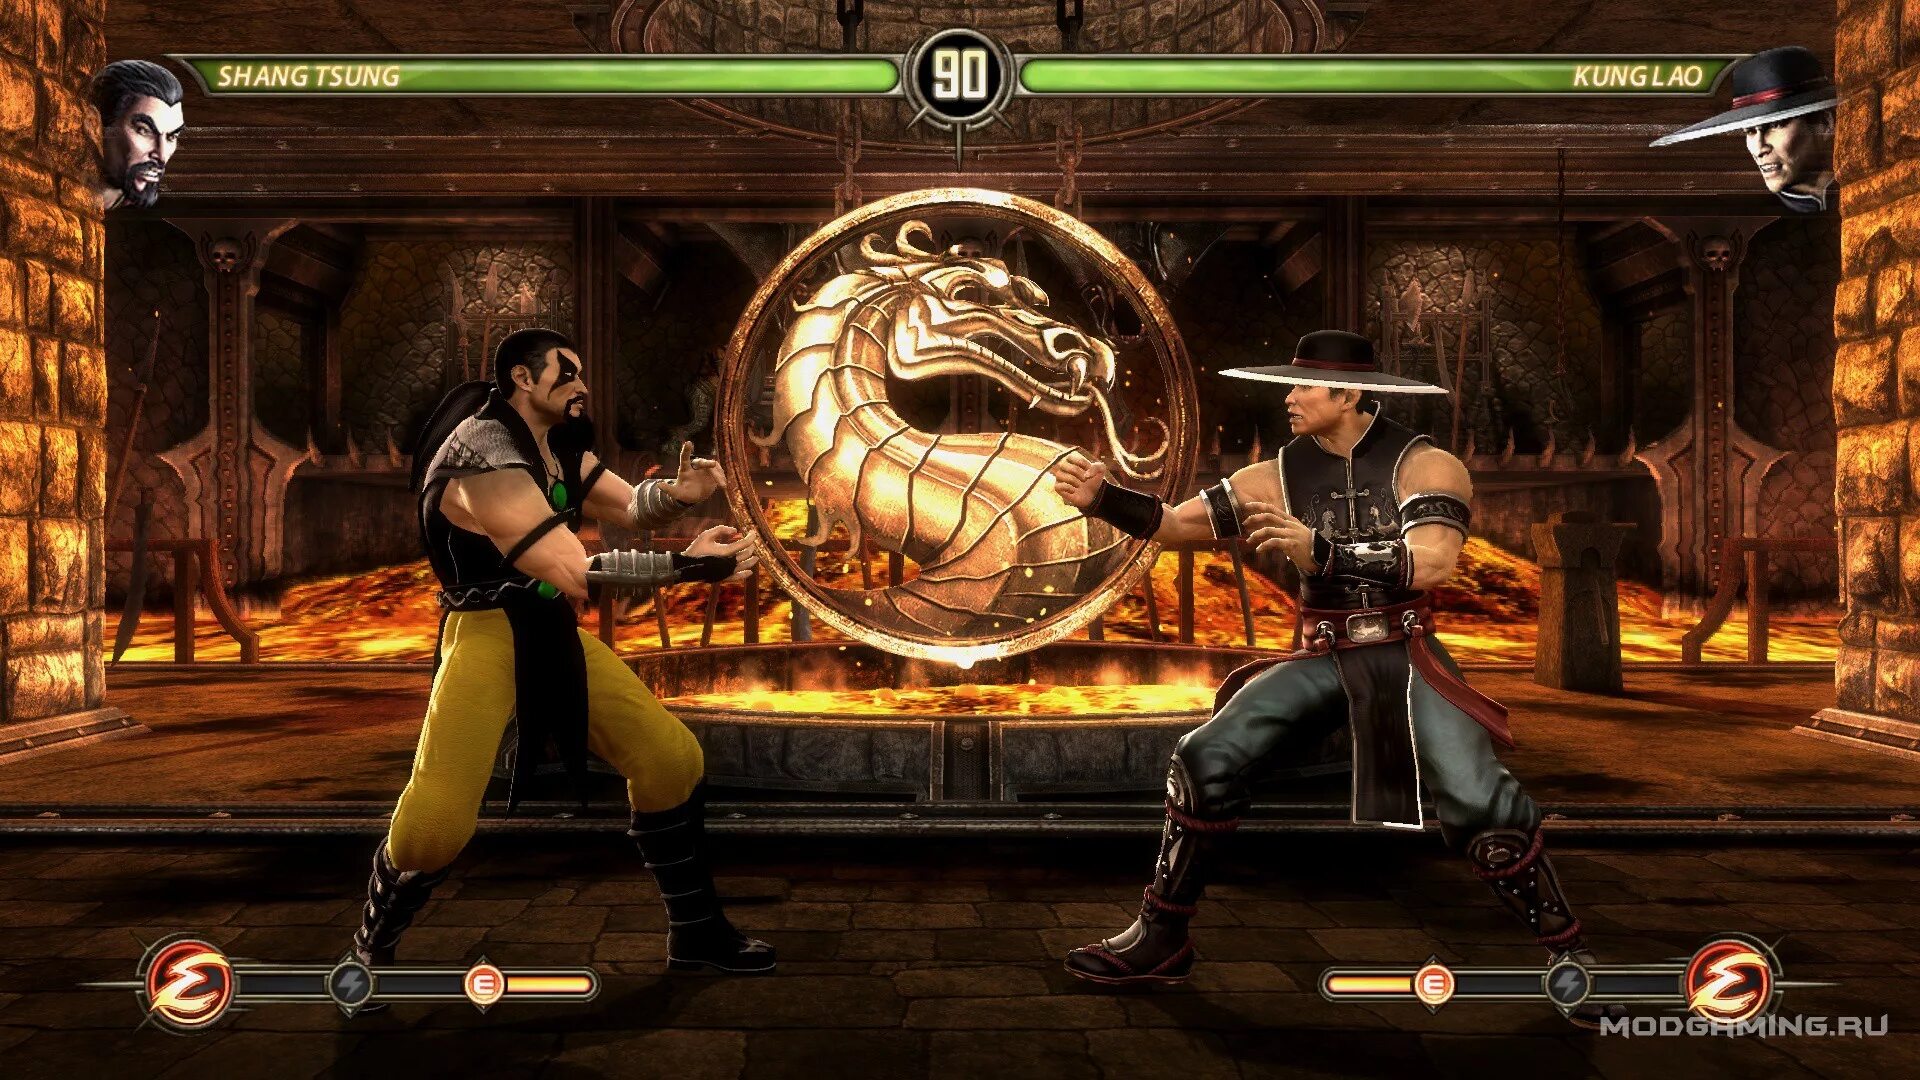 Шанг Цунг мортал комбат 3. Игра мортал комбат игра мортал комбат. Mortal Mortal Kombat 3 Shang Tsung. Mortal Kombat 2002. Мортал комбат старая игра